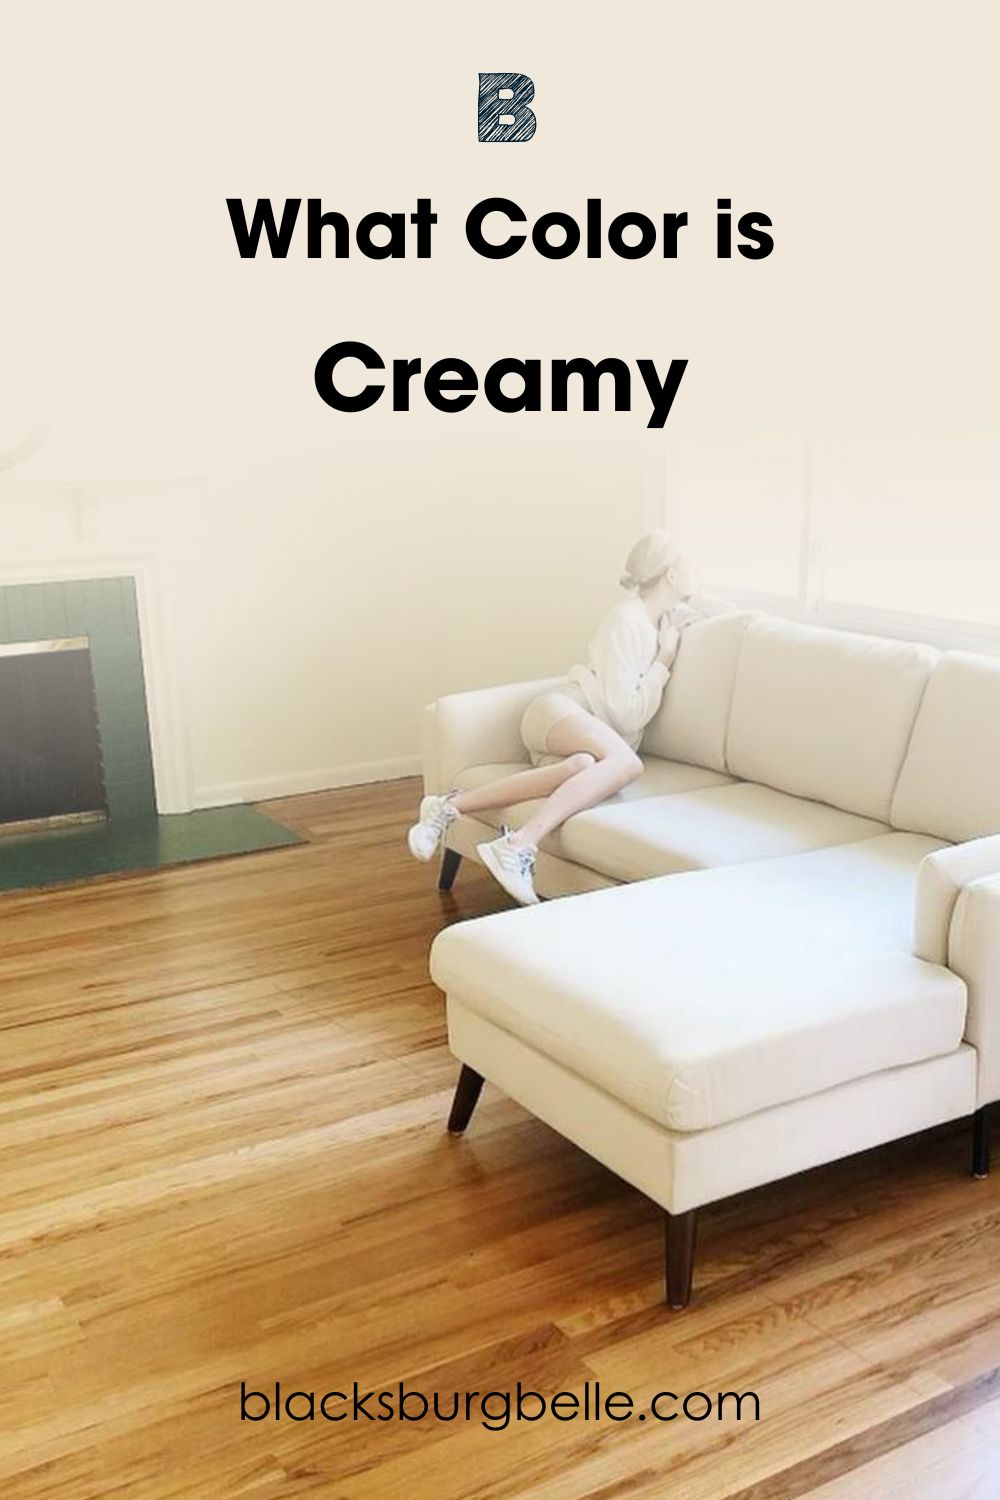 Creamy